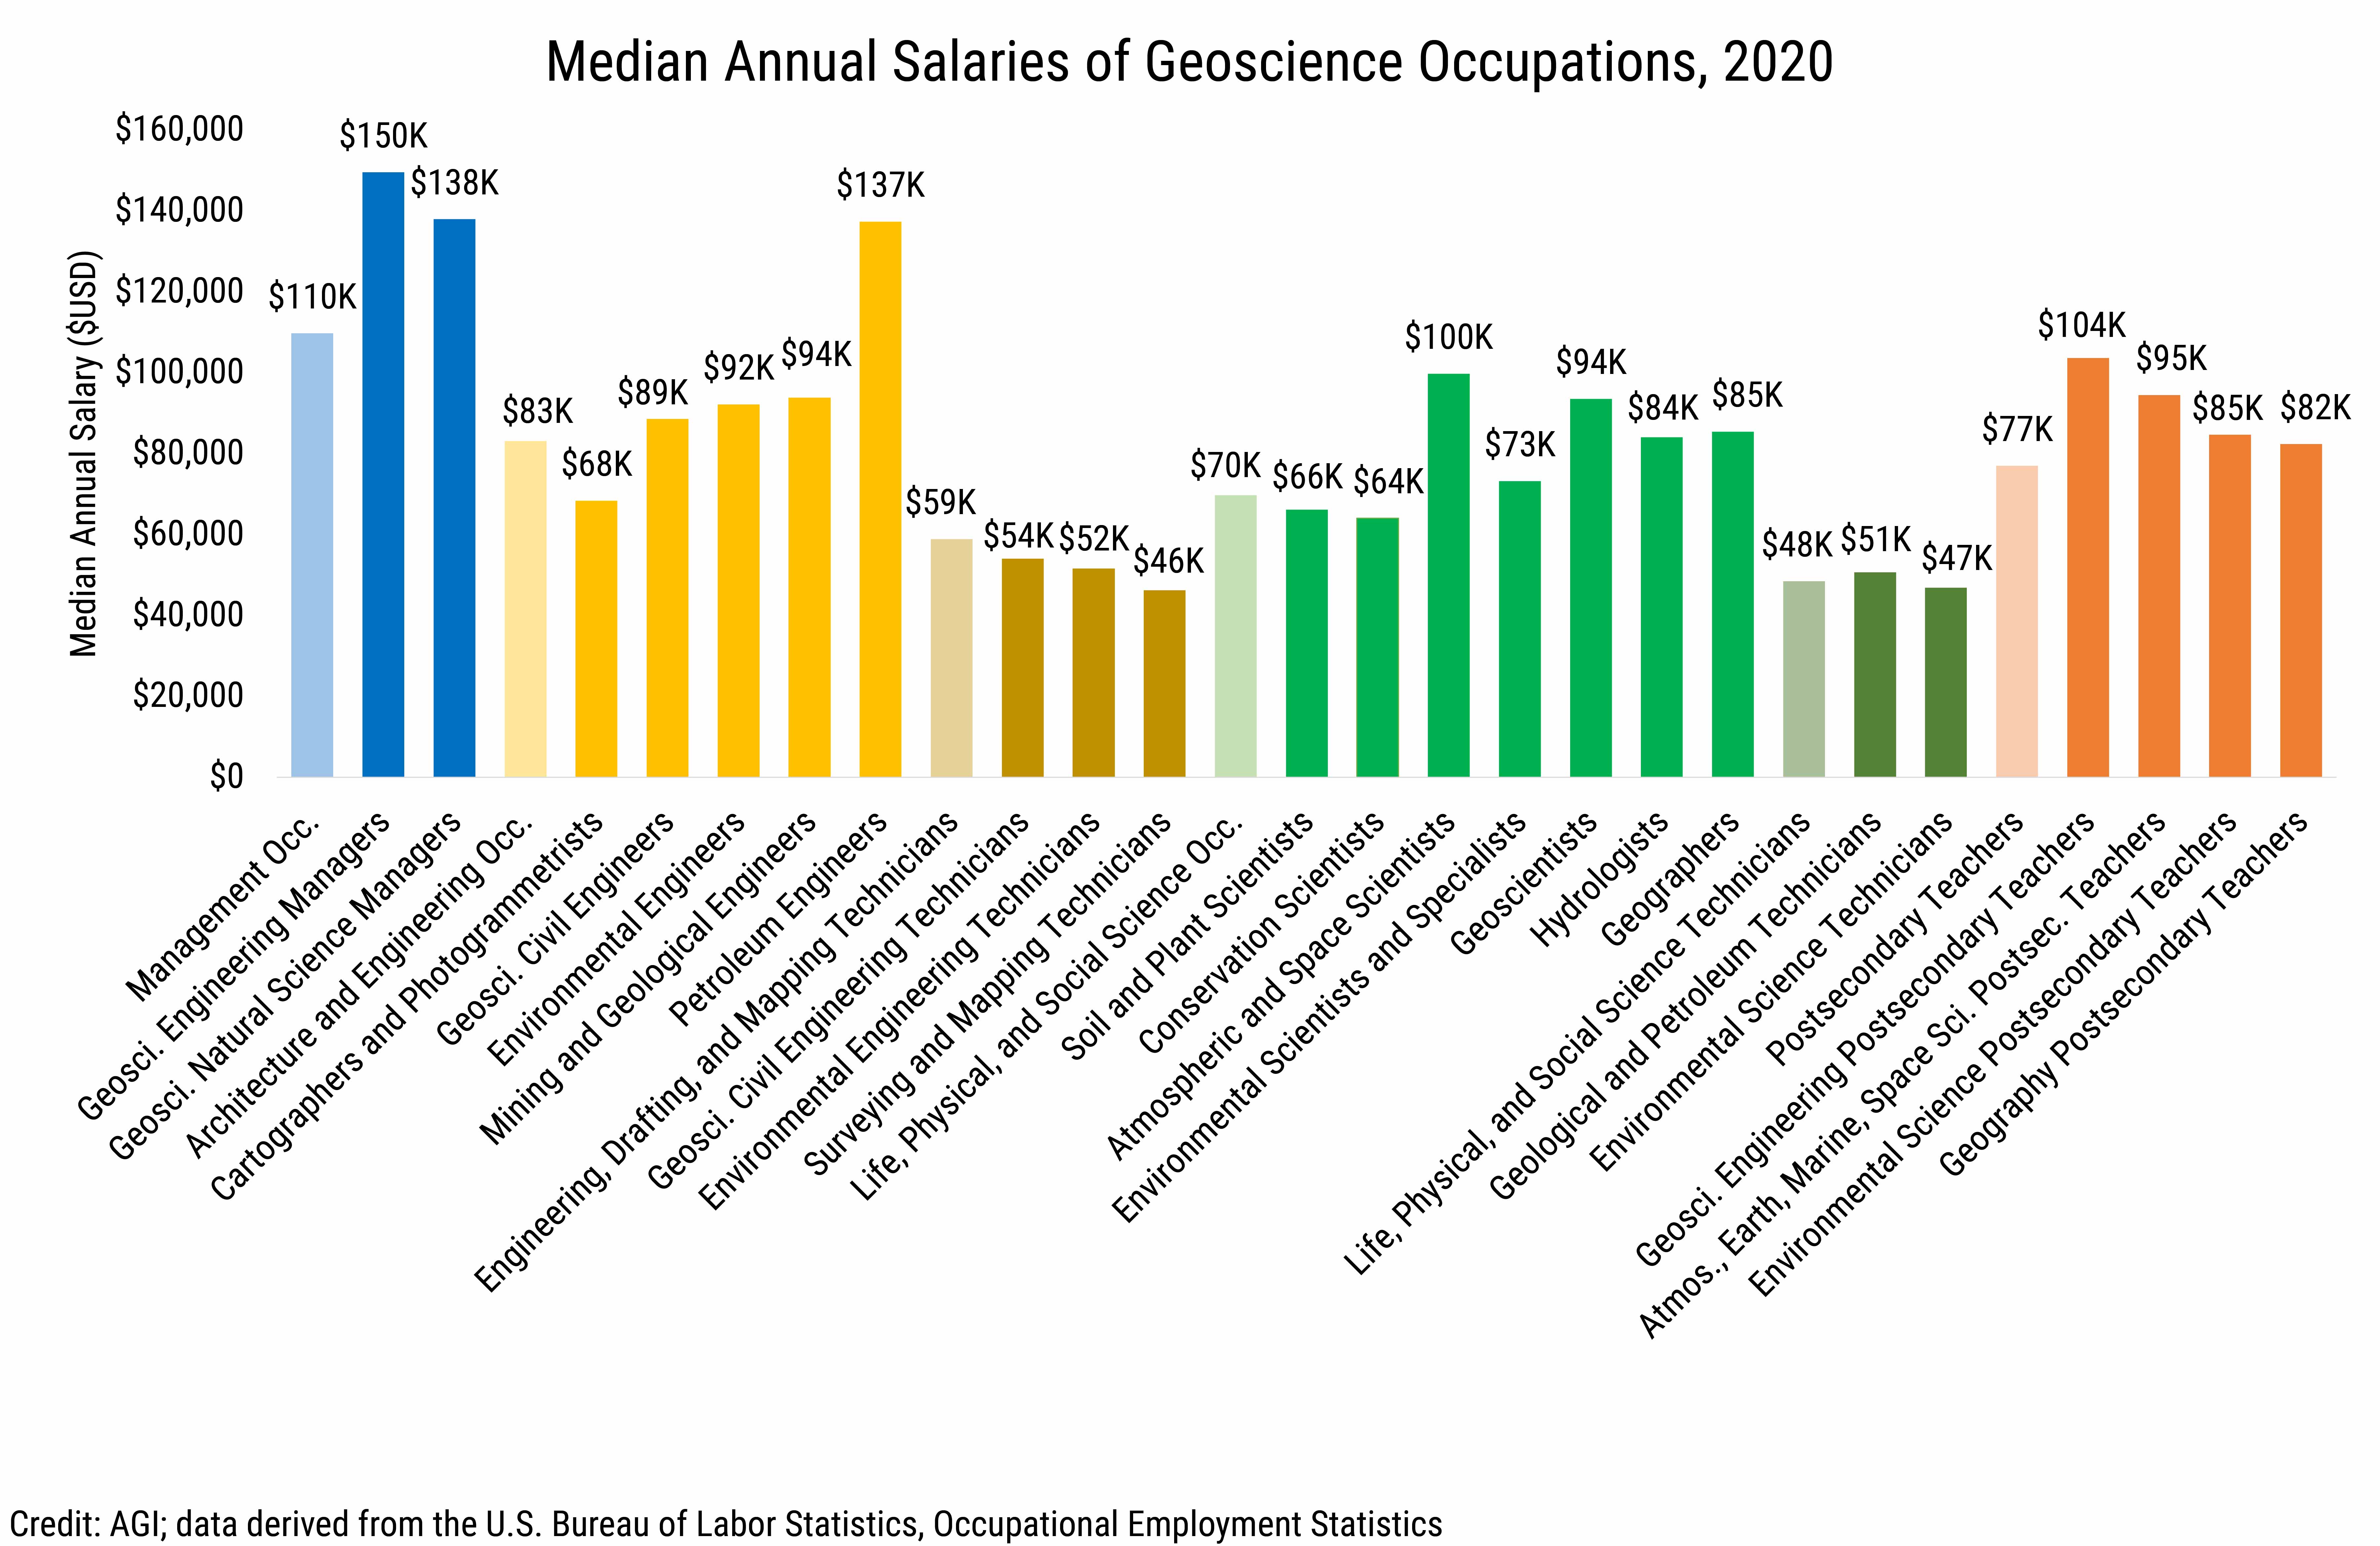 DB_2021-022 chart 01: Median Annual Salaries of Geoscience Occupations, 2020 (Credit: AGI; data derived from the U.S. Bureau of Labor Statistics, Occupational Employment Statistics)